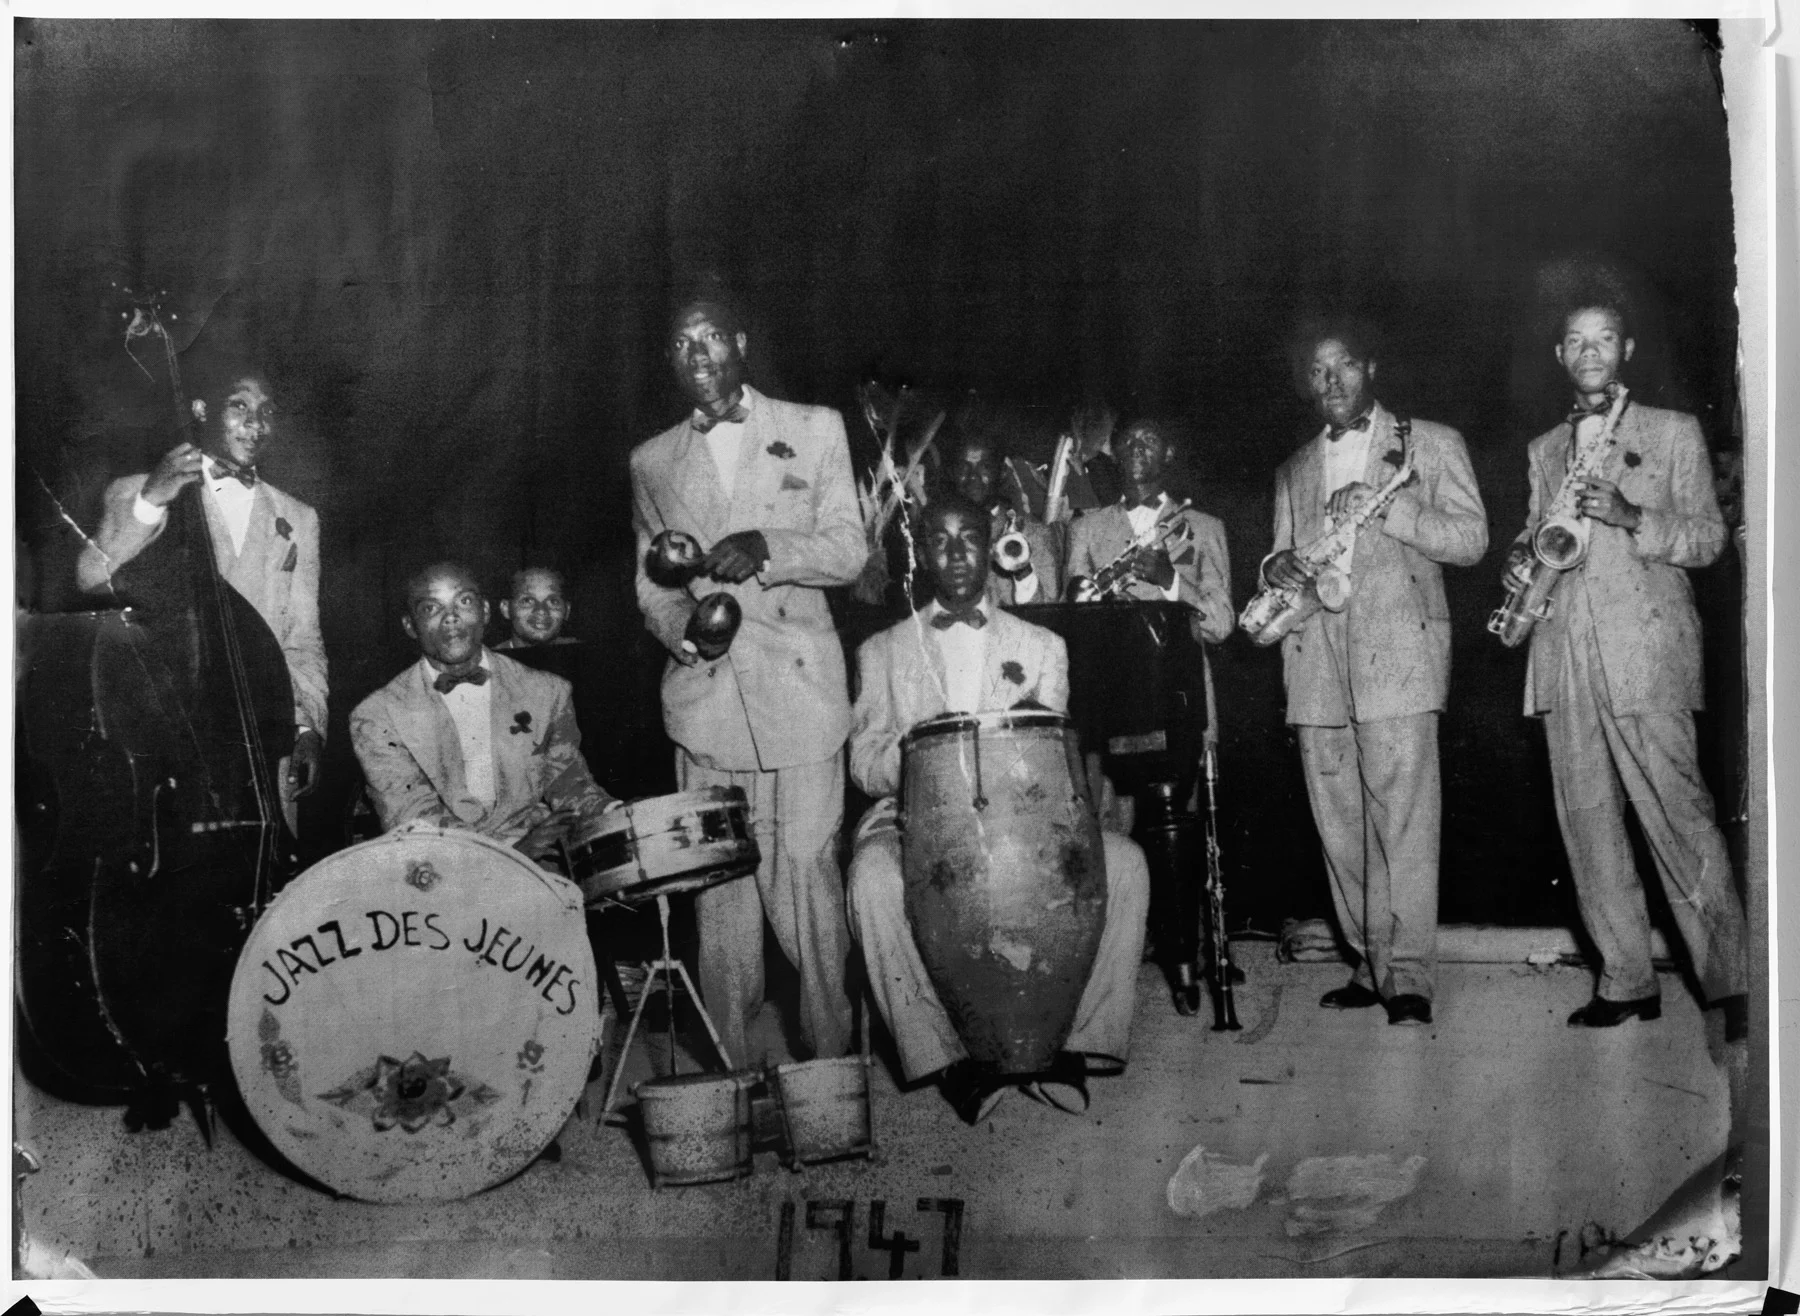 Haiti Super Jazz des Jeunes (1950s)